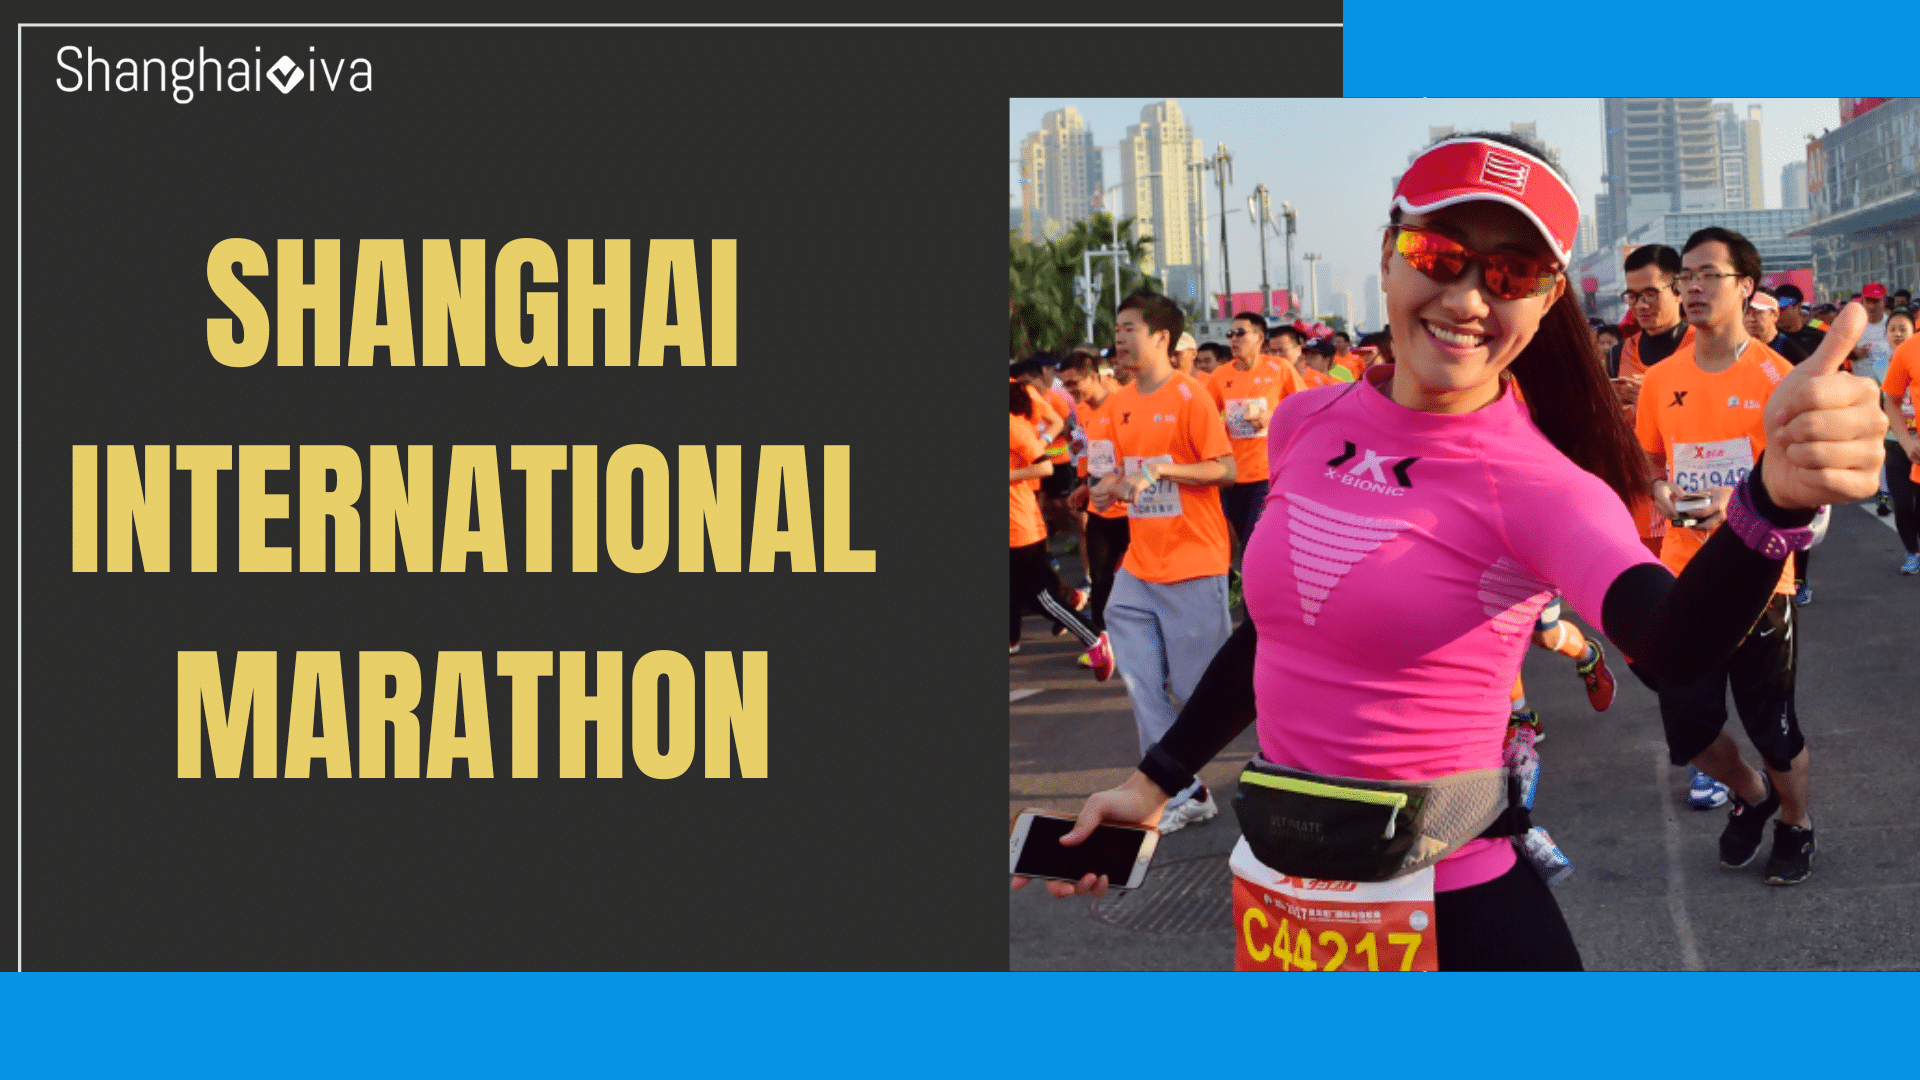 Shanghai International Marathon: Registration and Route